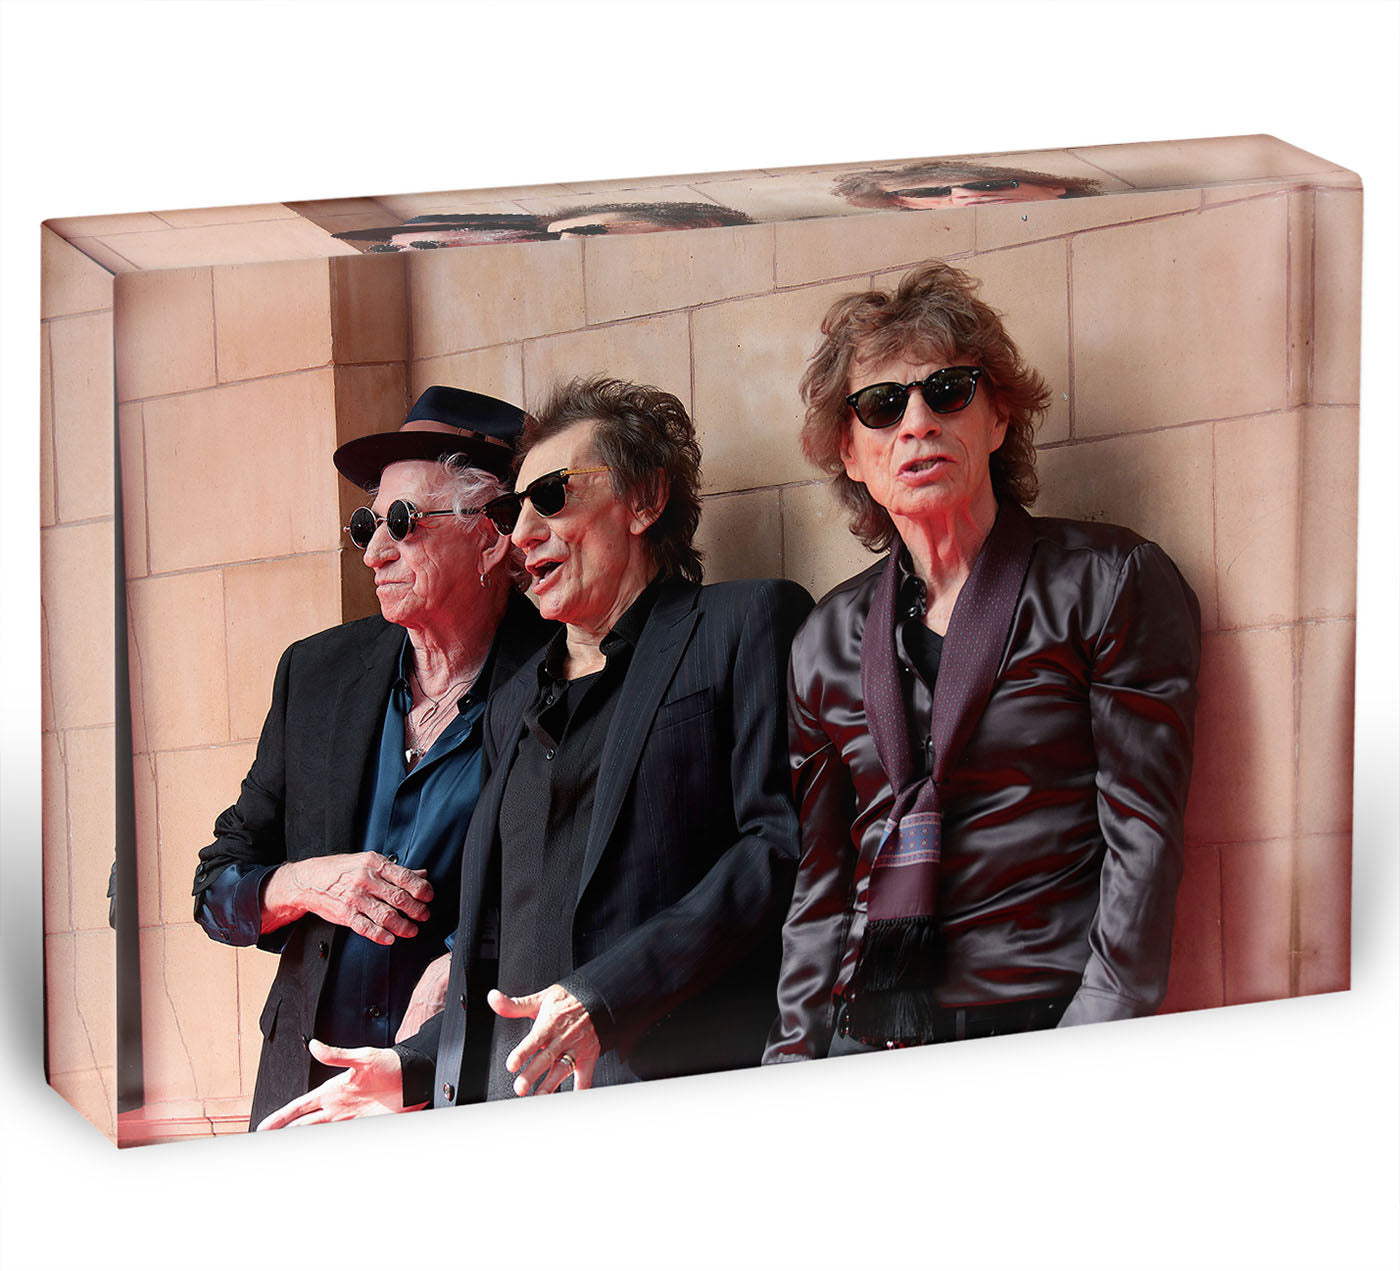 Rolling Stones Hackney Diamonds launch event Acrylic Block - Canvas Art Rocks - 1